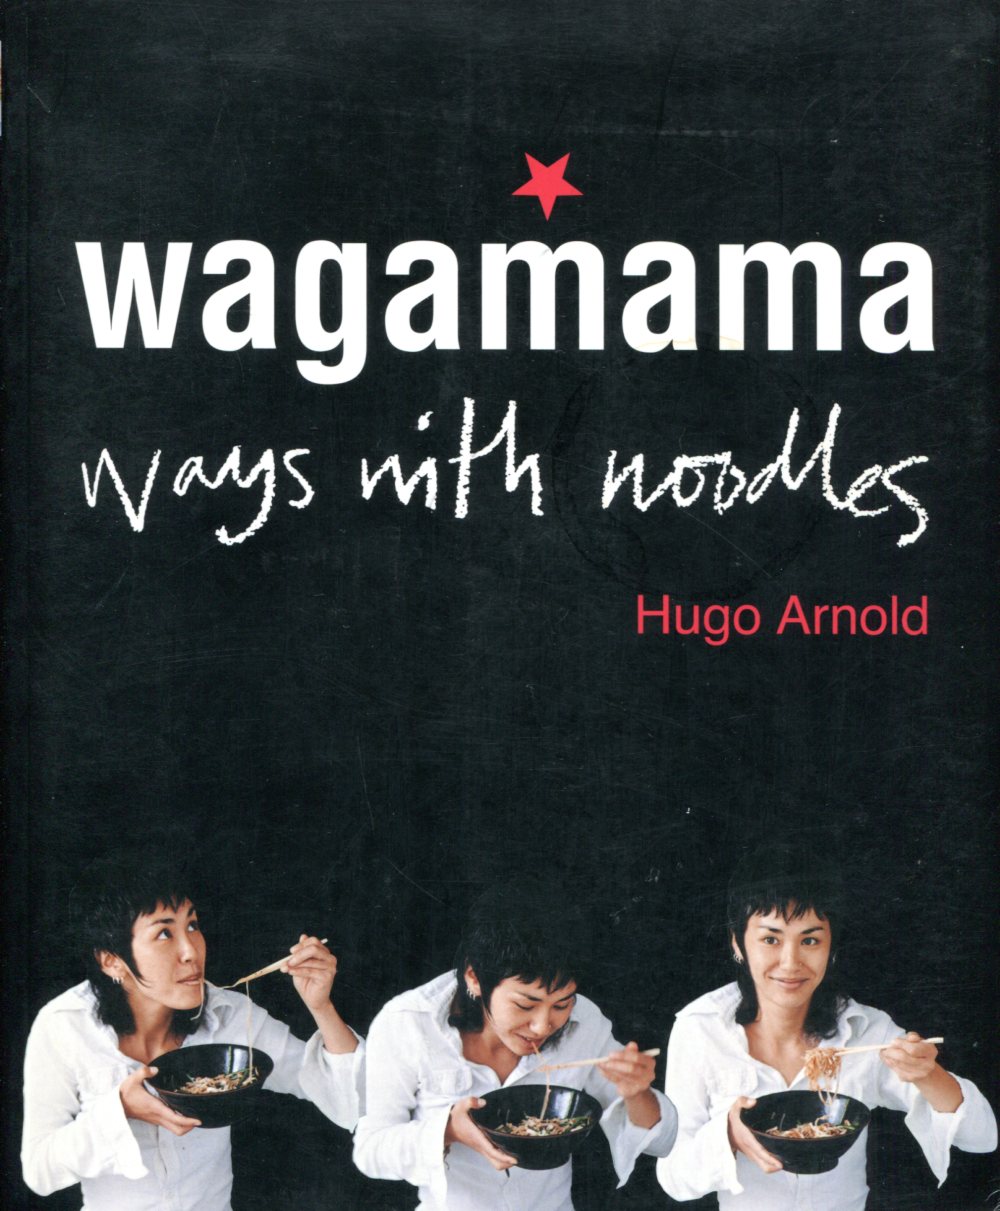 Wagamama - Ways with noodles - Hugo Arnold